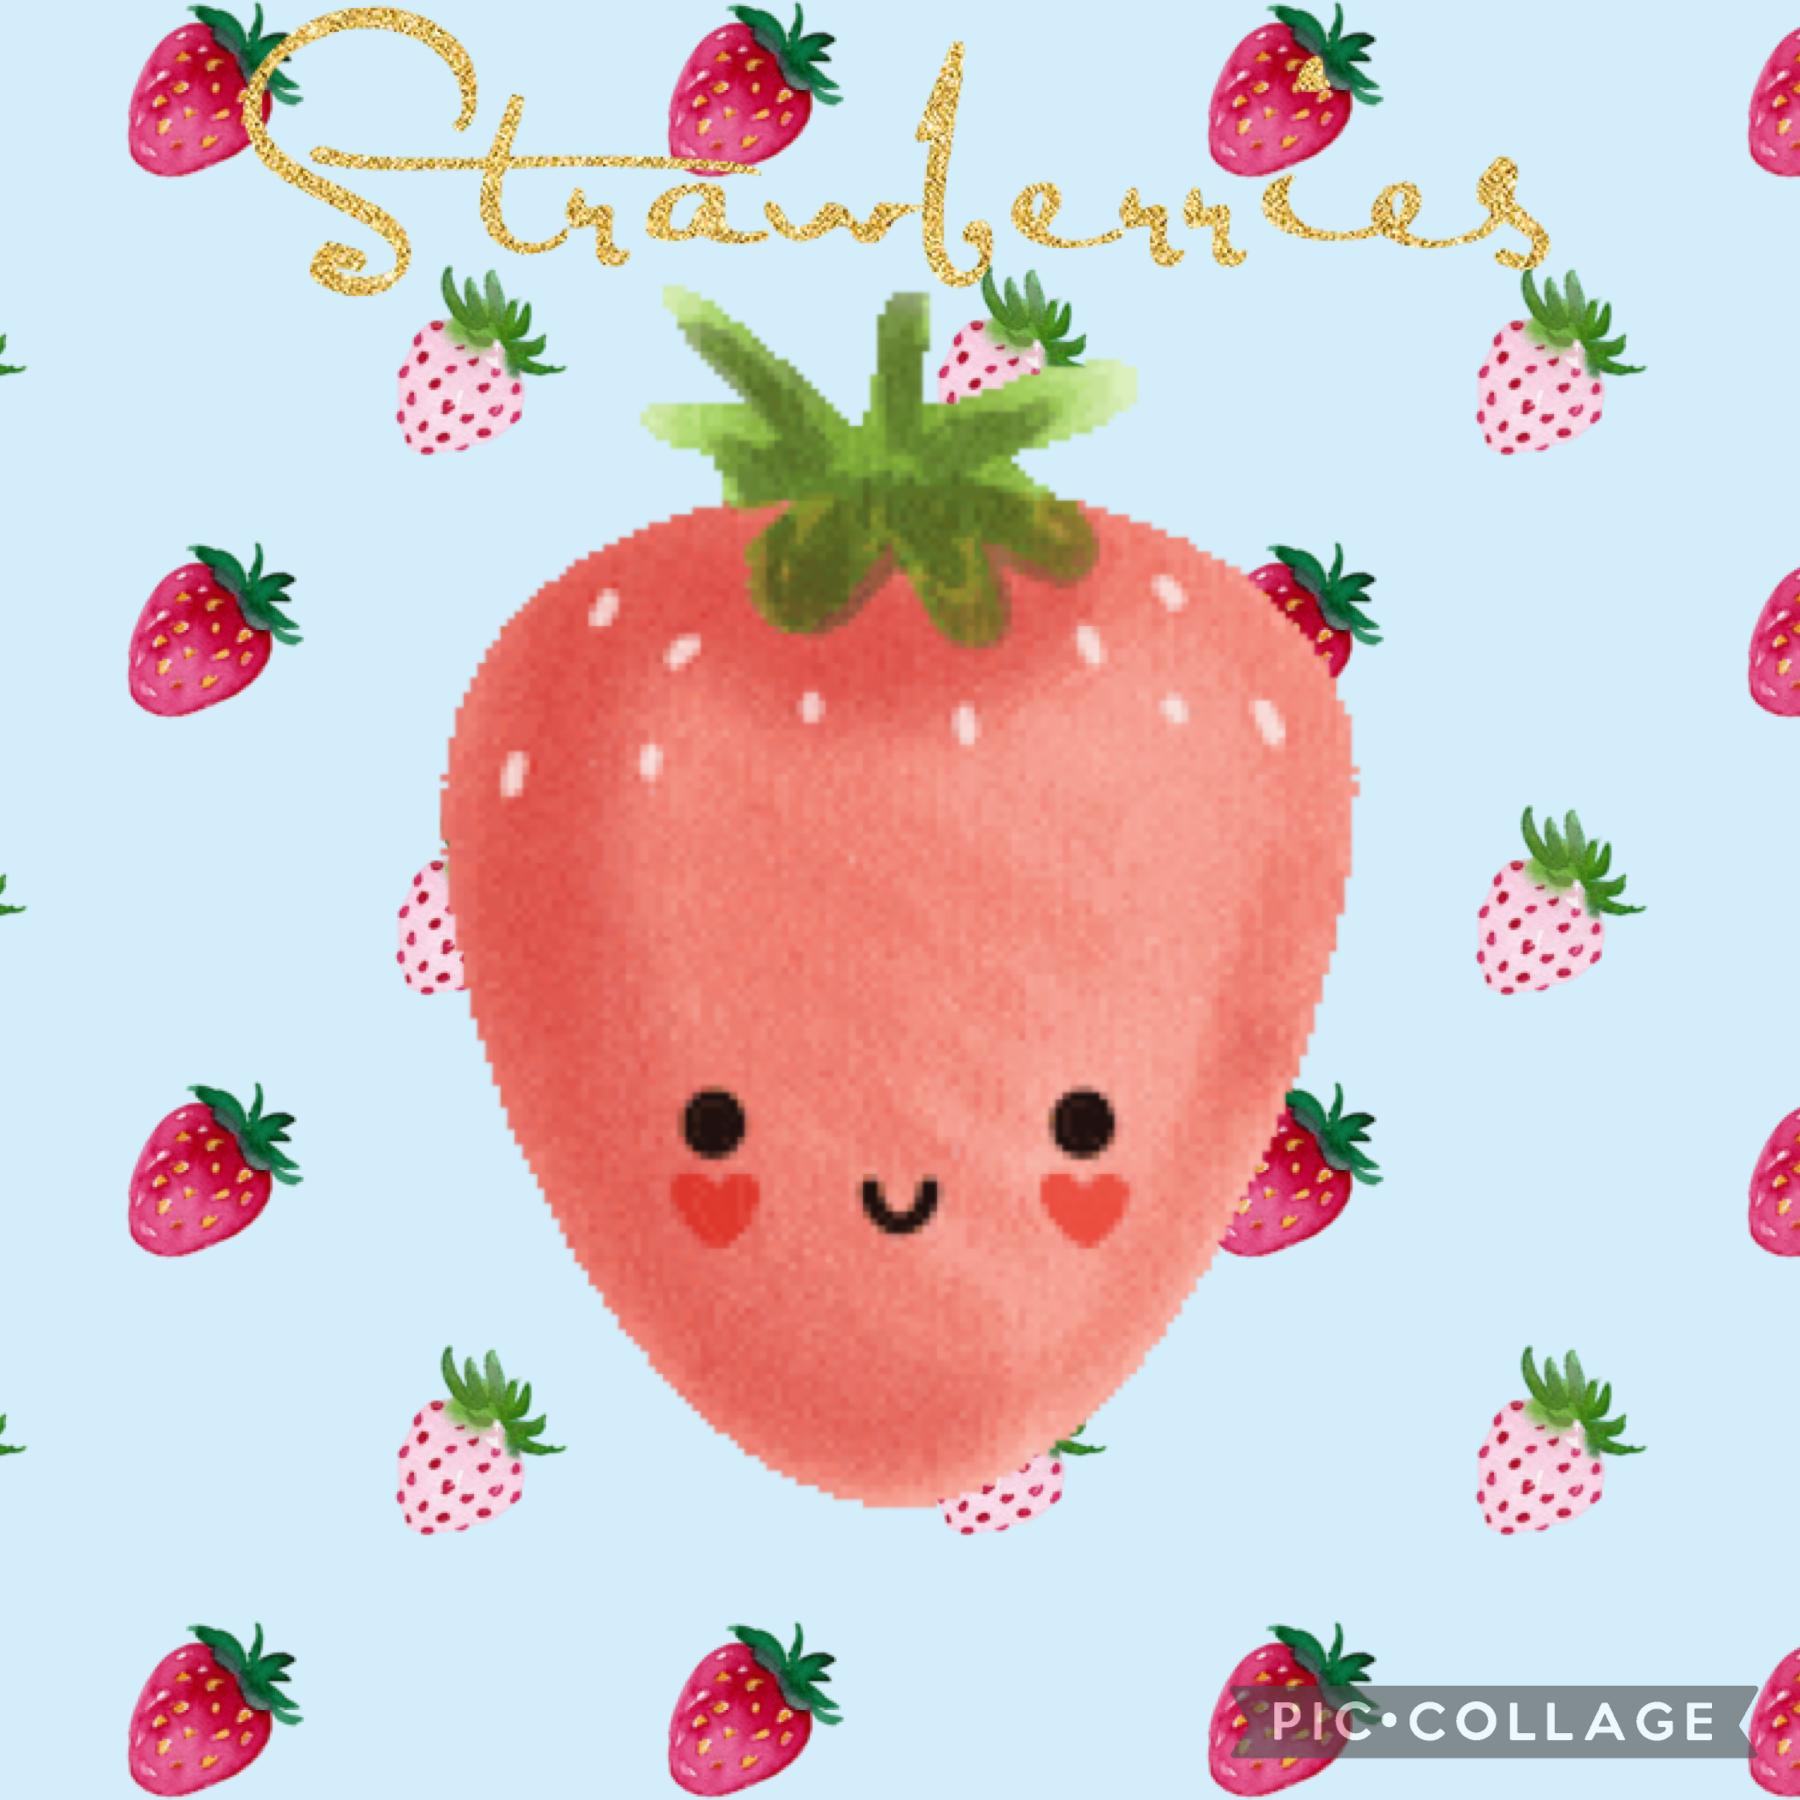 I love strawberries that are my fav